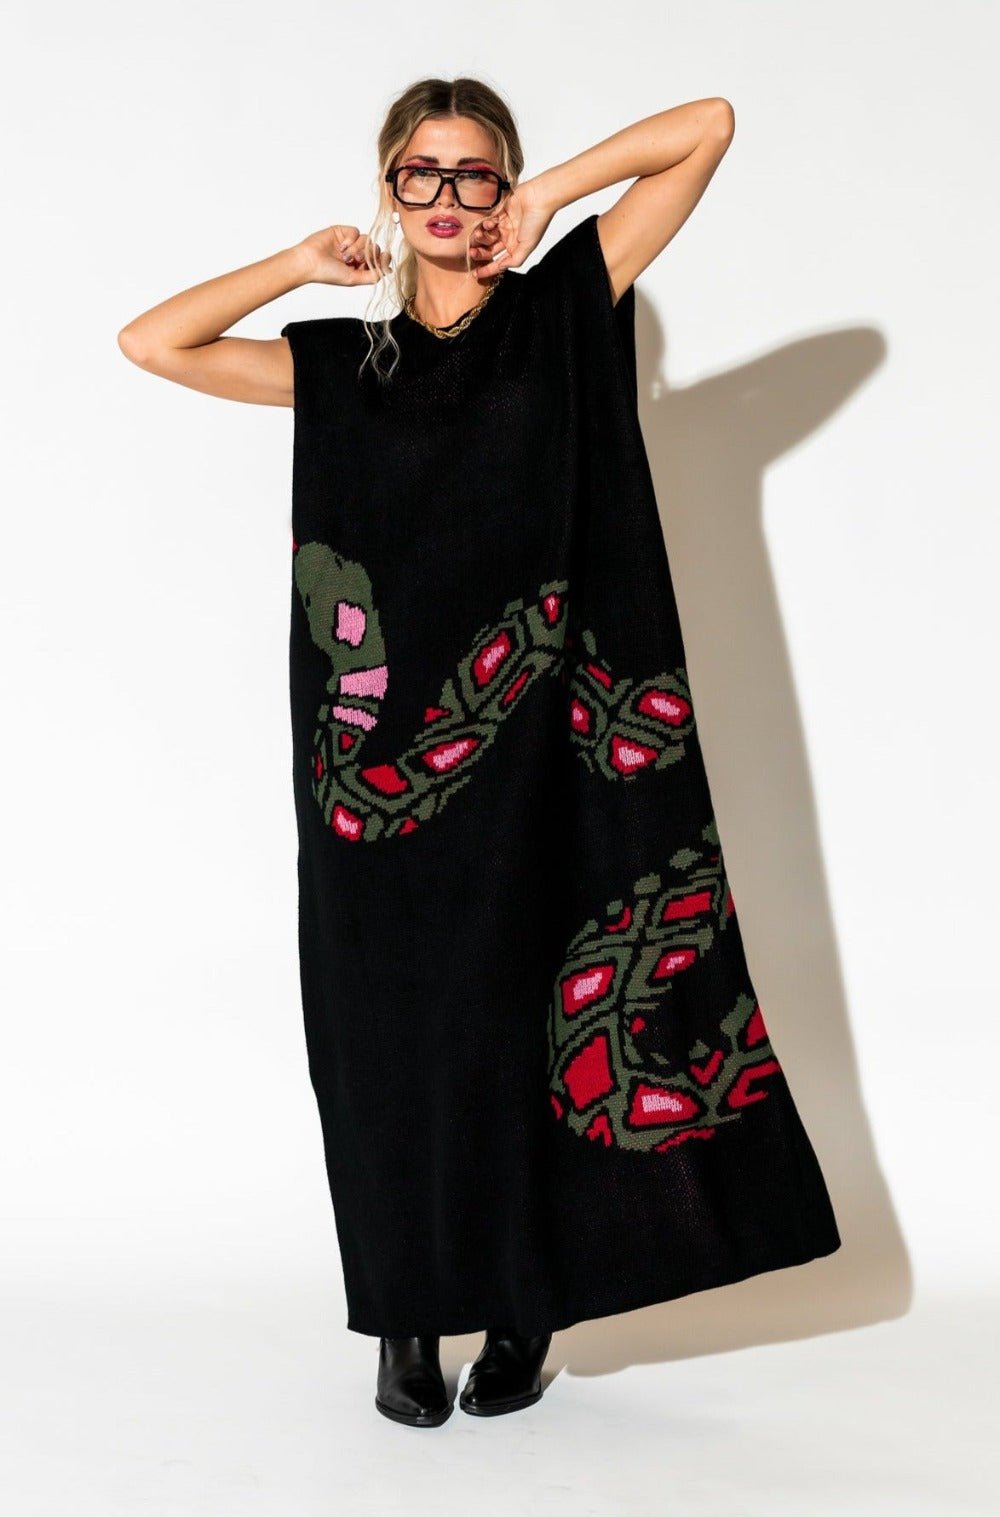 LALA ORIGINAL: Big Reputation Oversized in Knit Dressed Lala Snake – in Dress Maxi